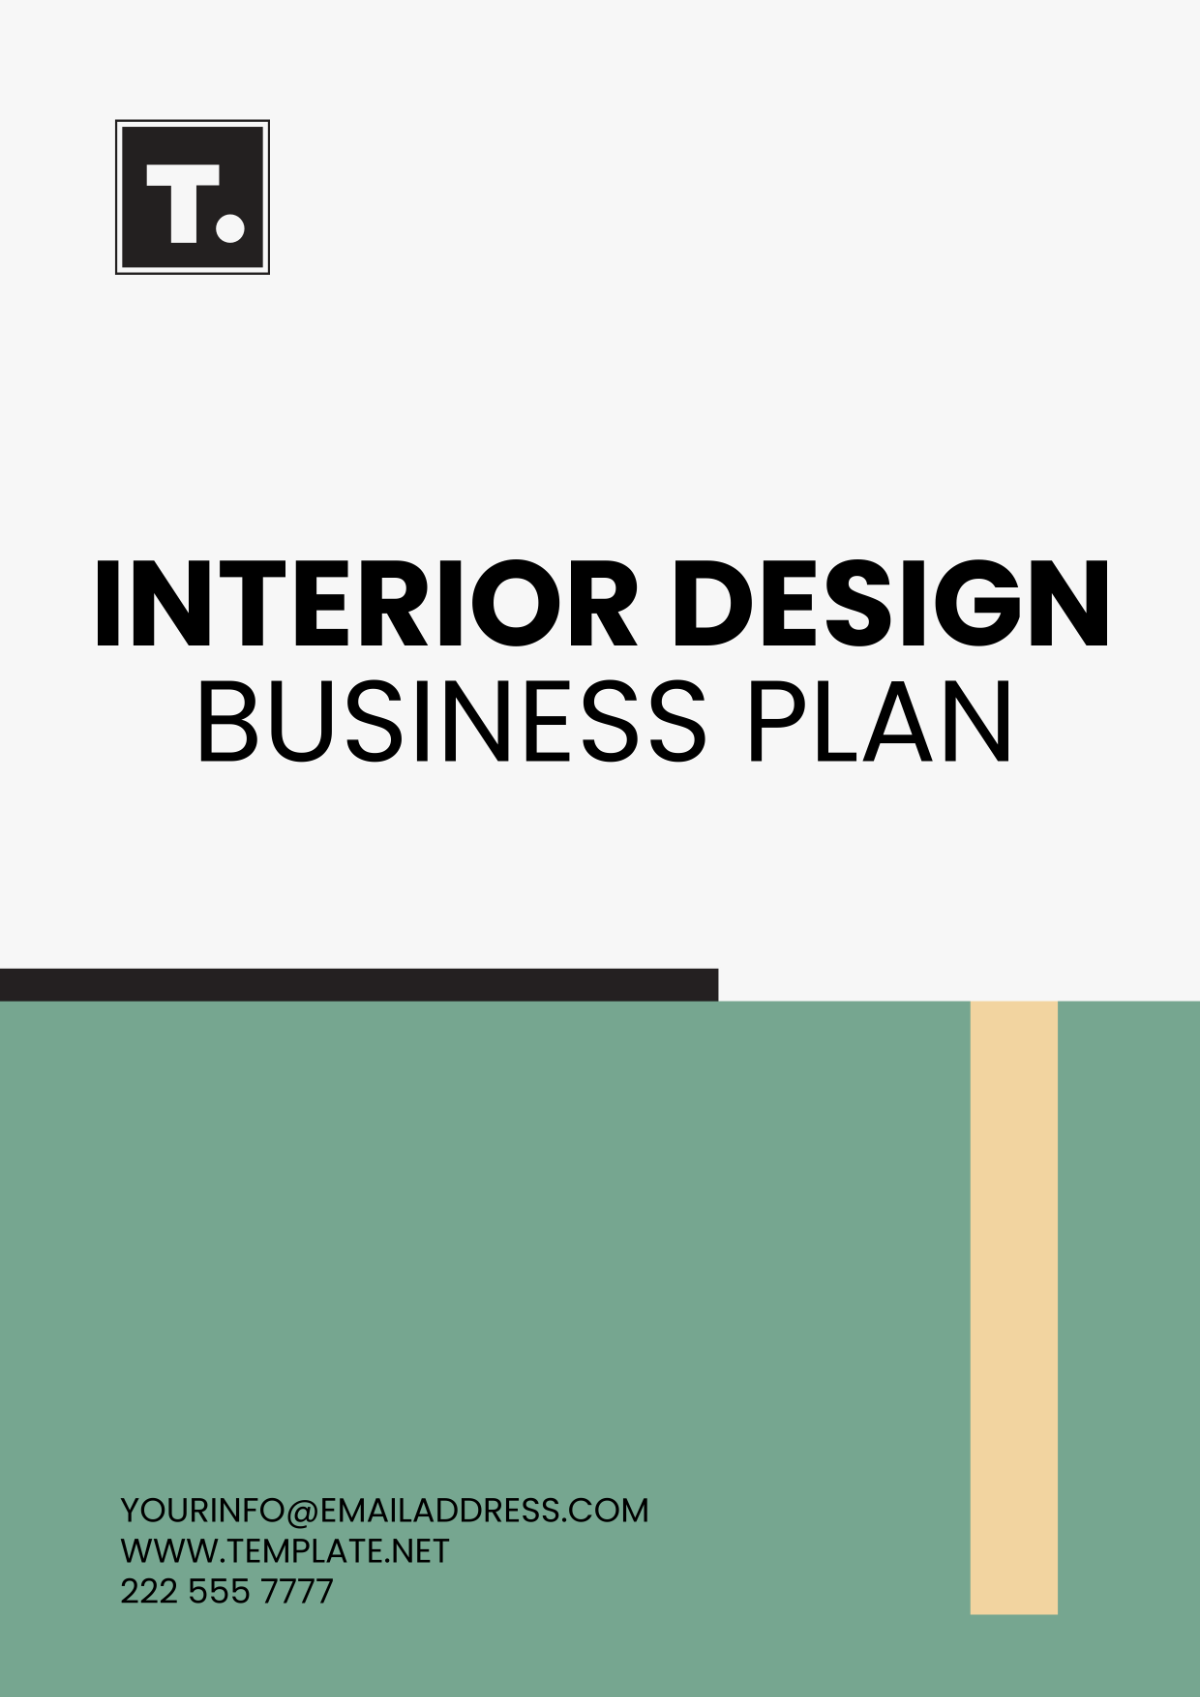 Interior Design Business Plan Template